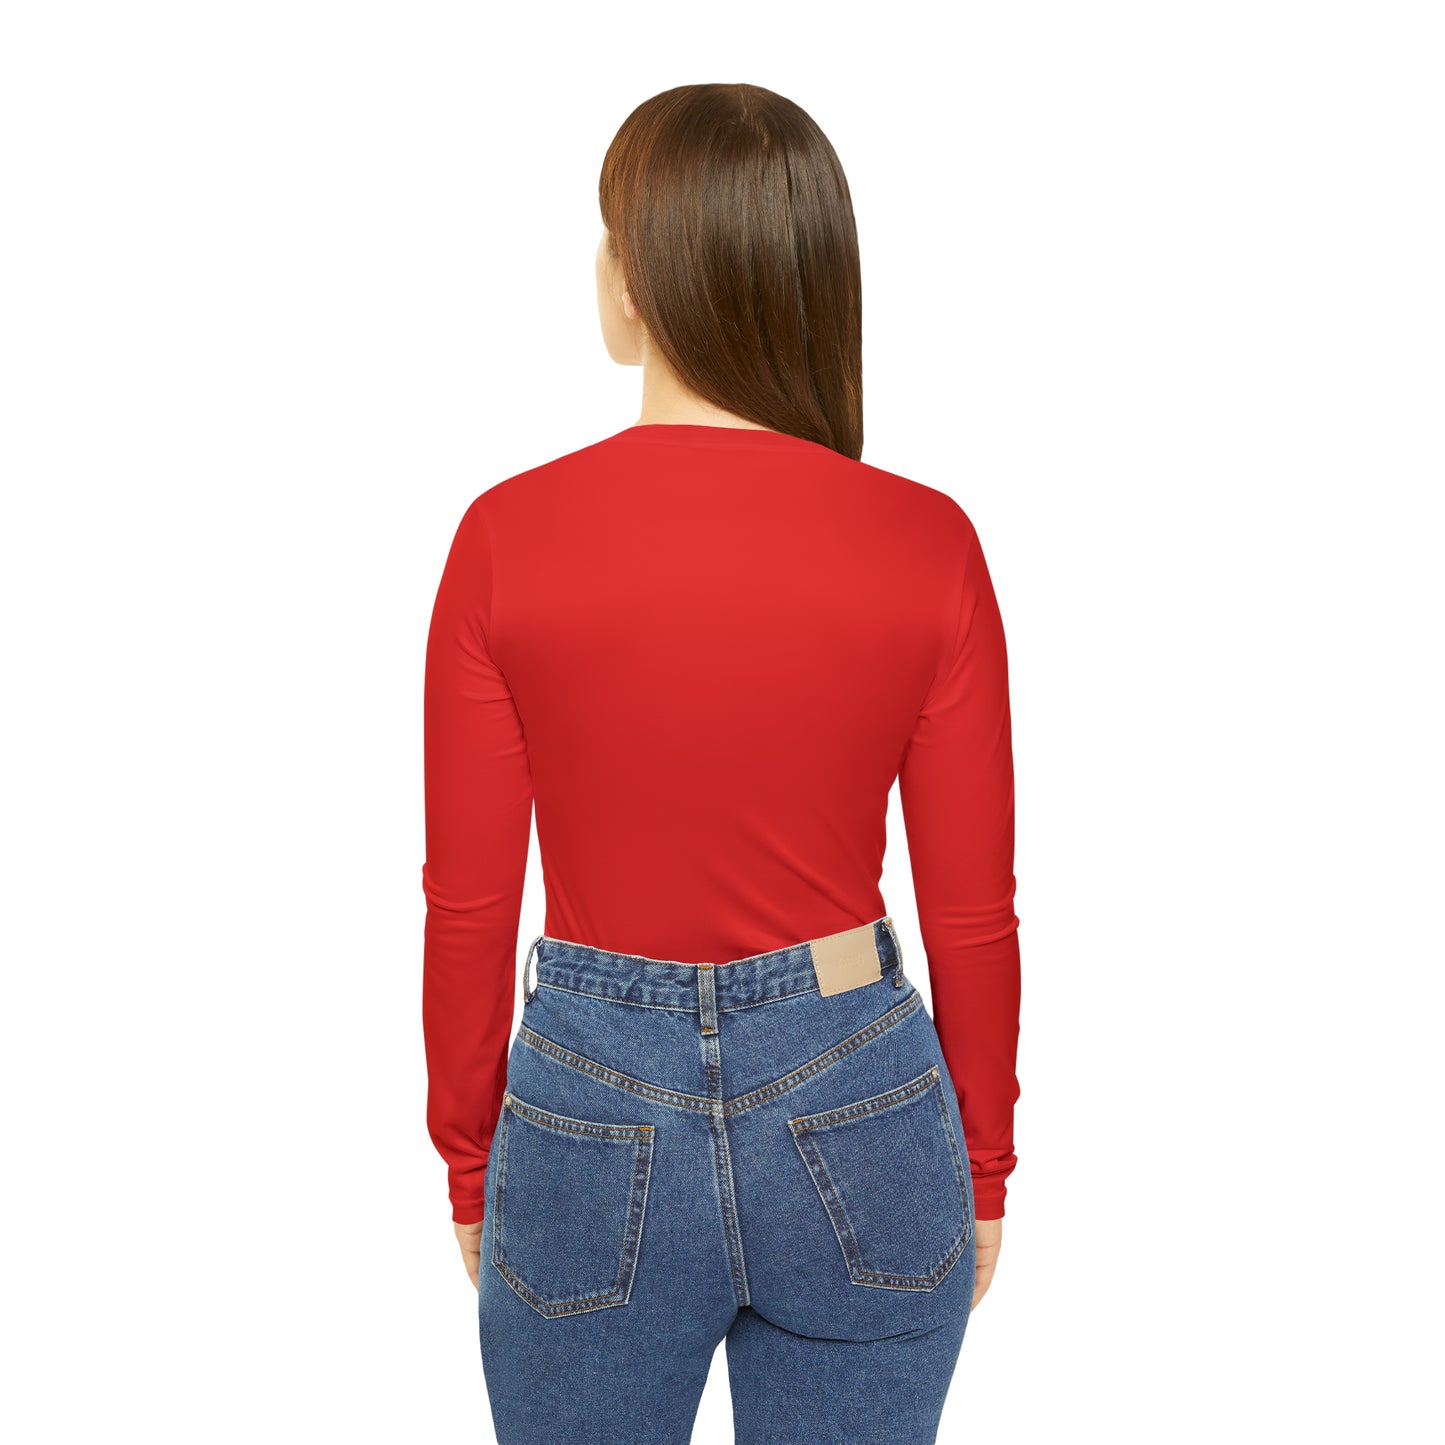 Premium Crap II Women's Long Sleeve V-neck Shirt - Red